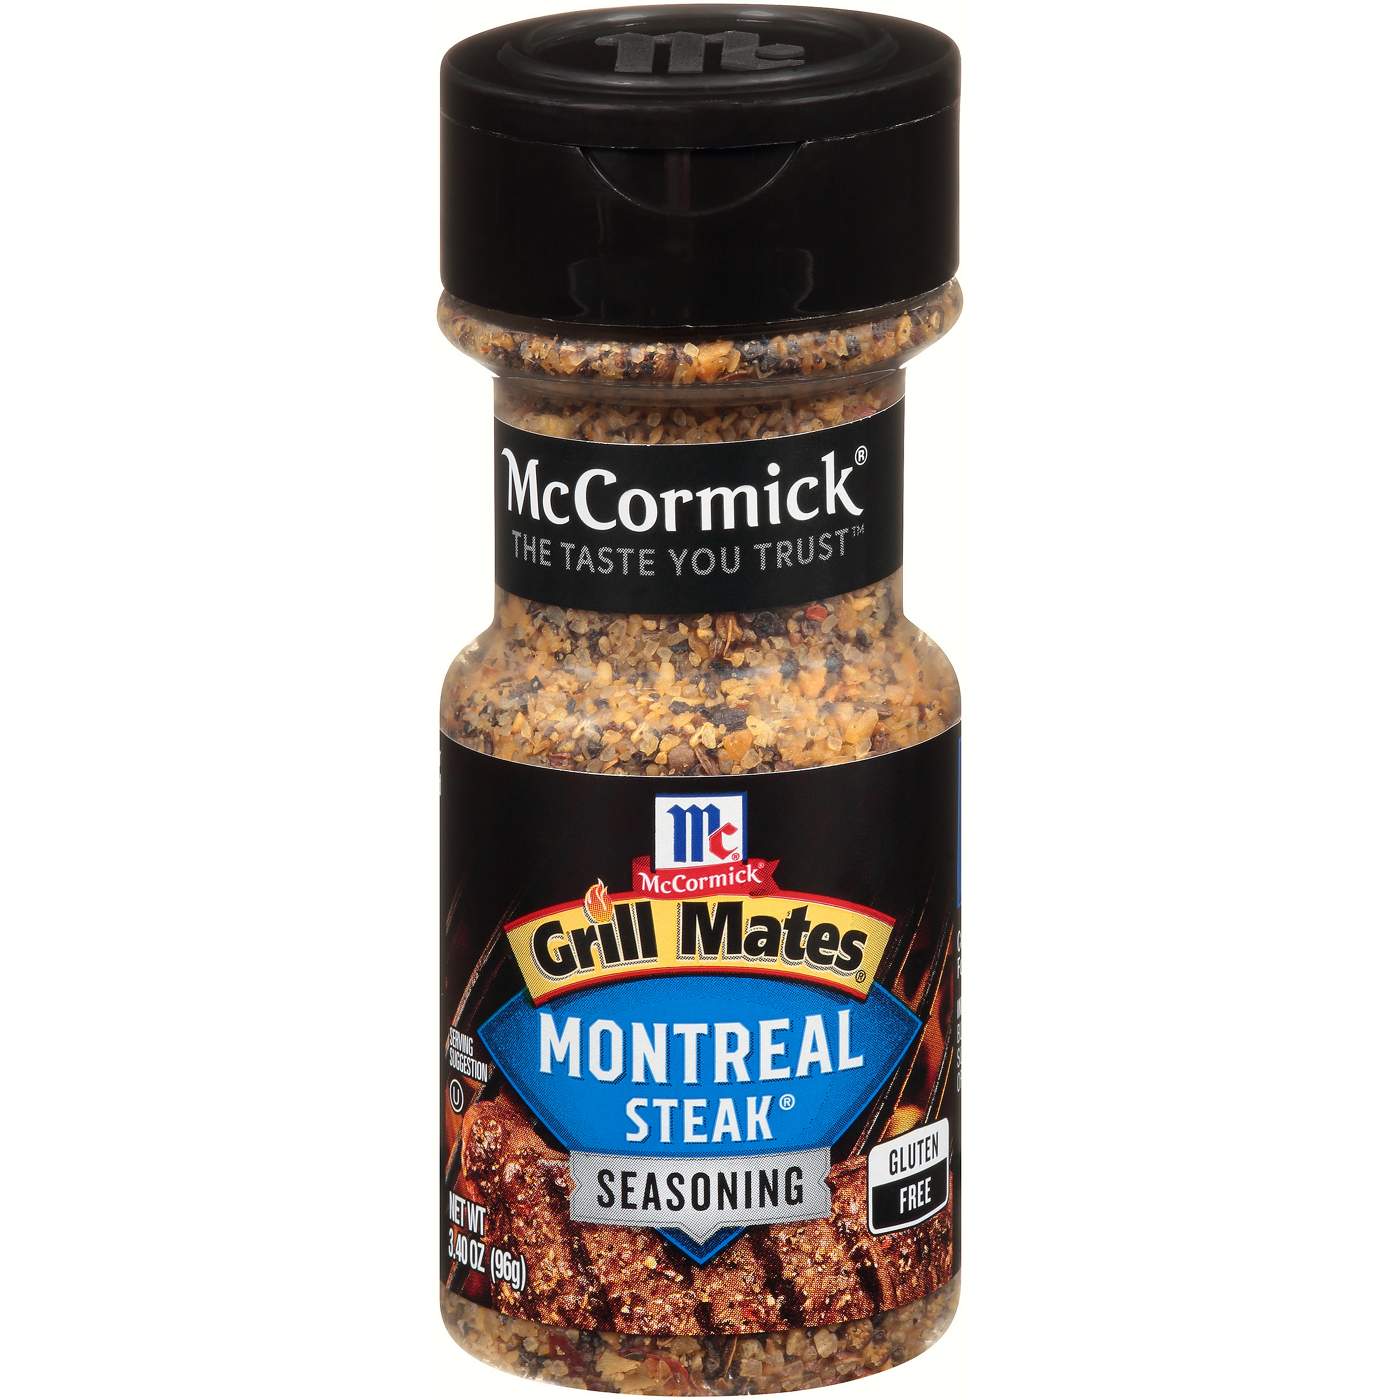 McCormick Grill Mates Montreal Steak Seasoning; image 1 of 8